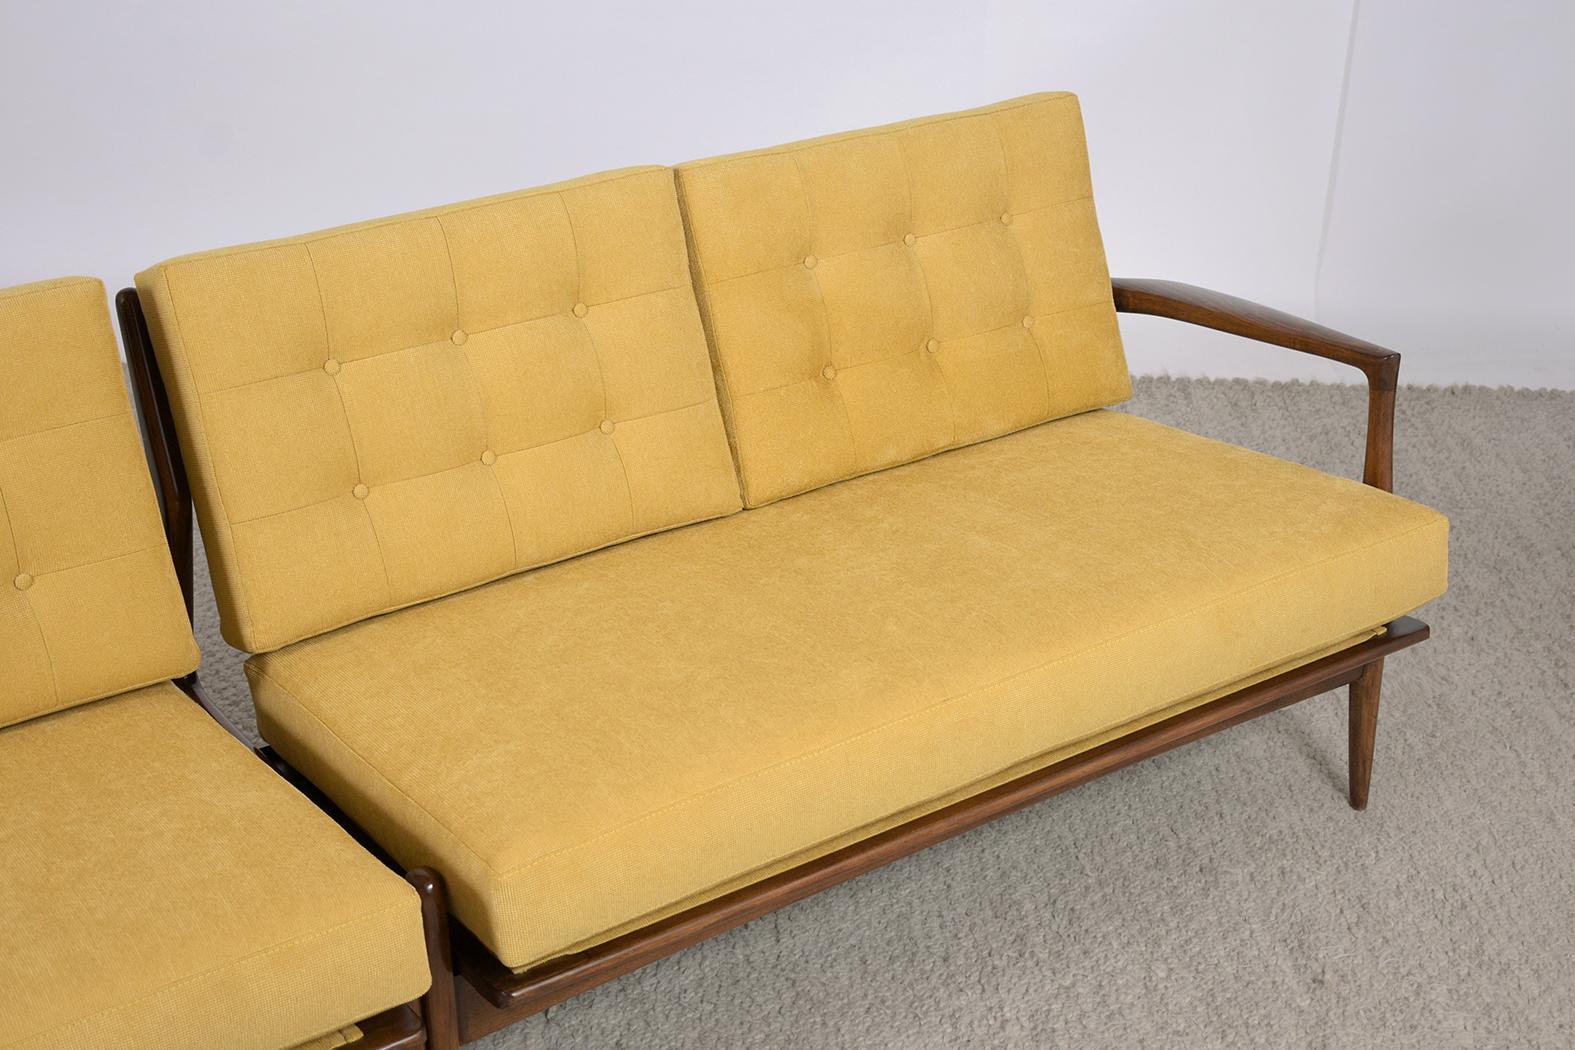 1960s Danish Mid-Century Modern Teak Sectional Sofa in Mustard Yellow 1